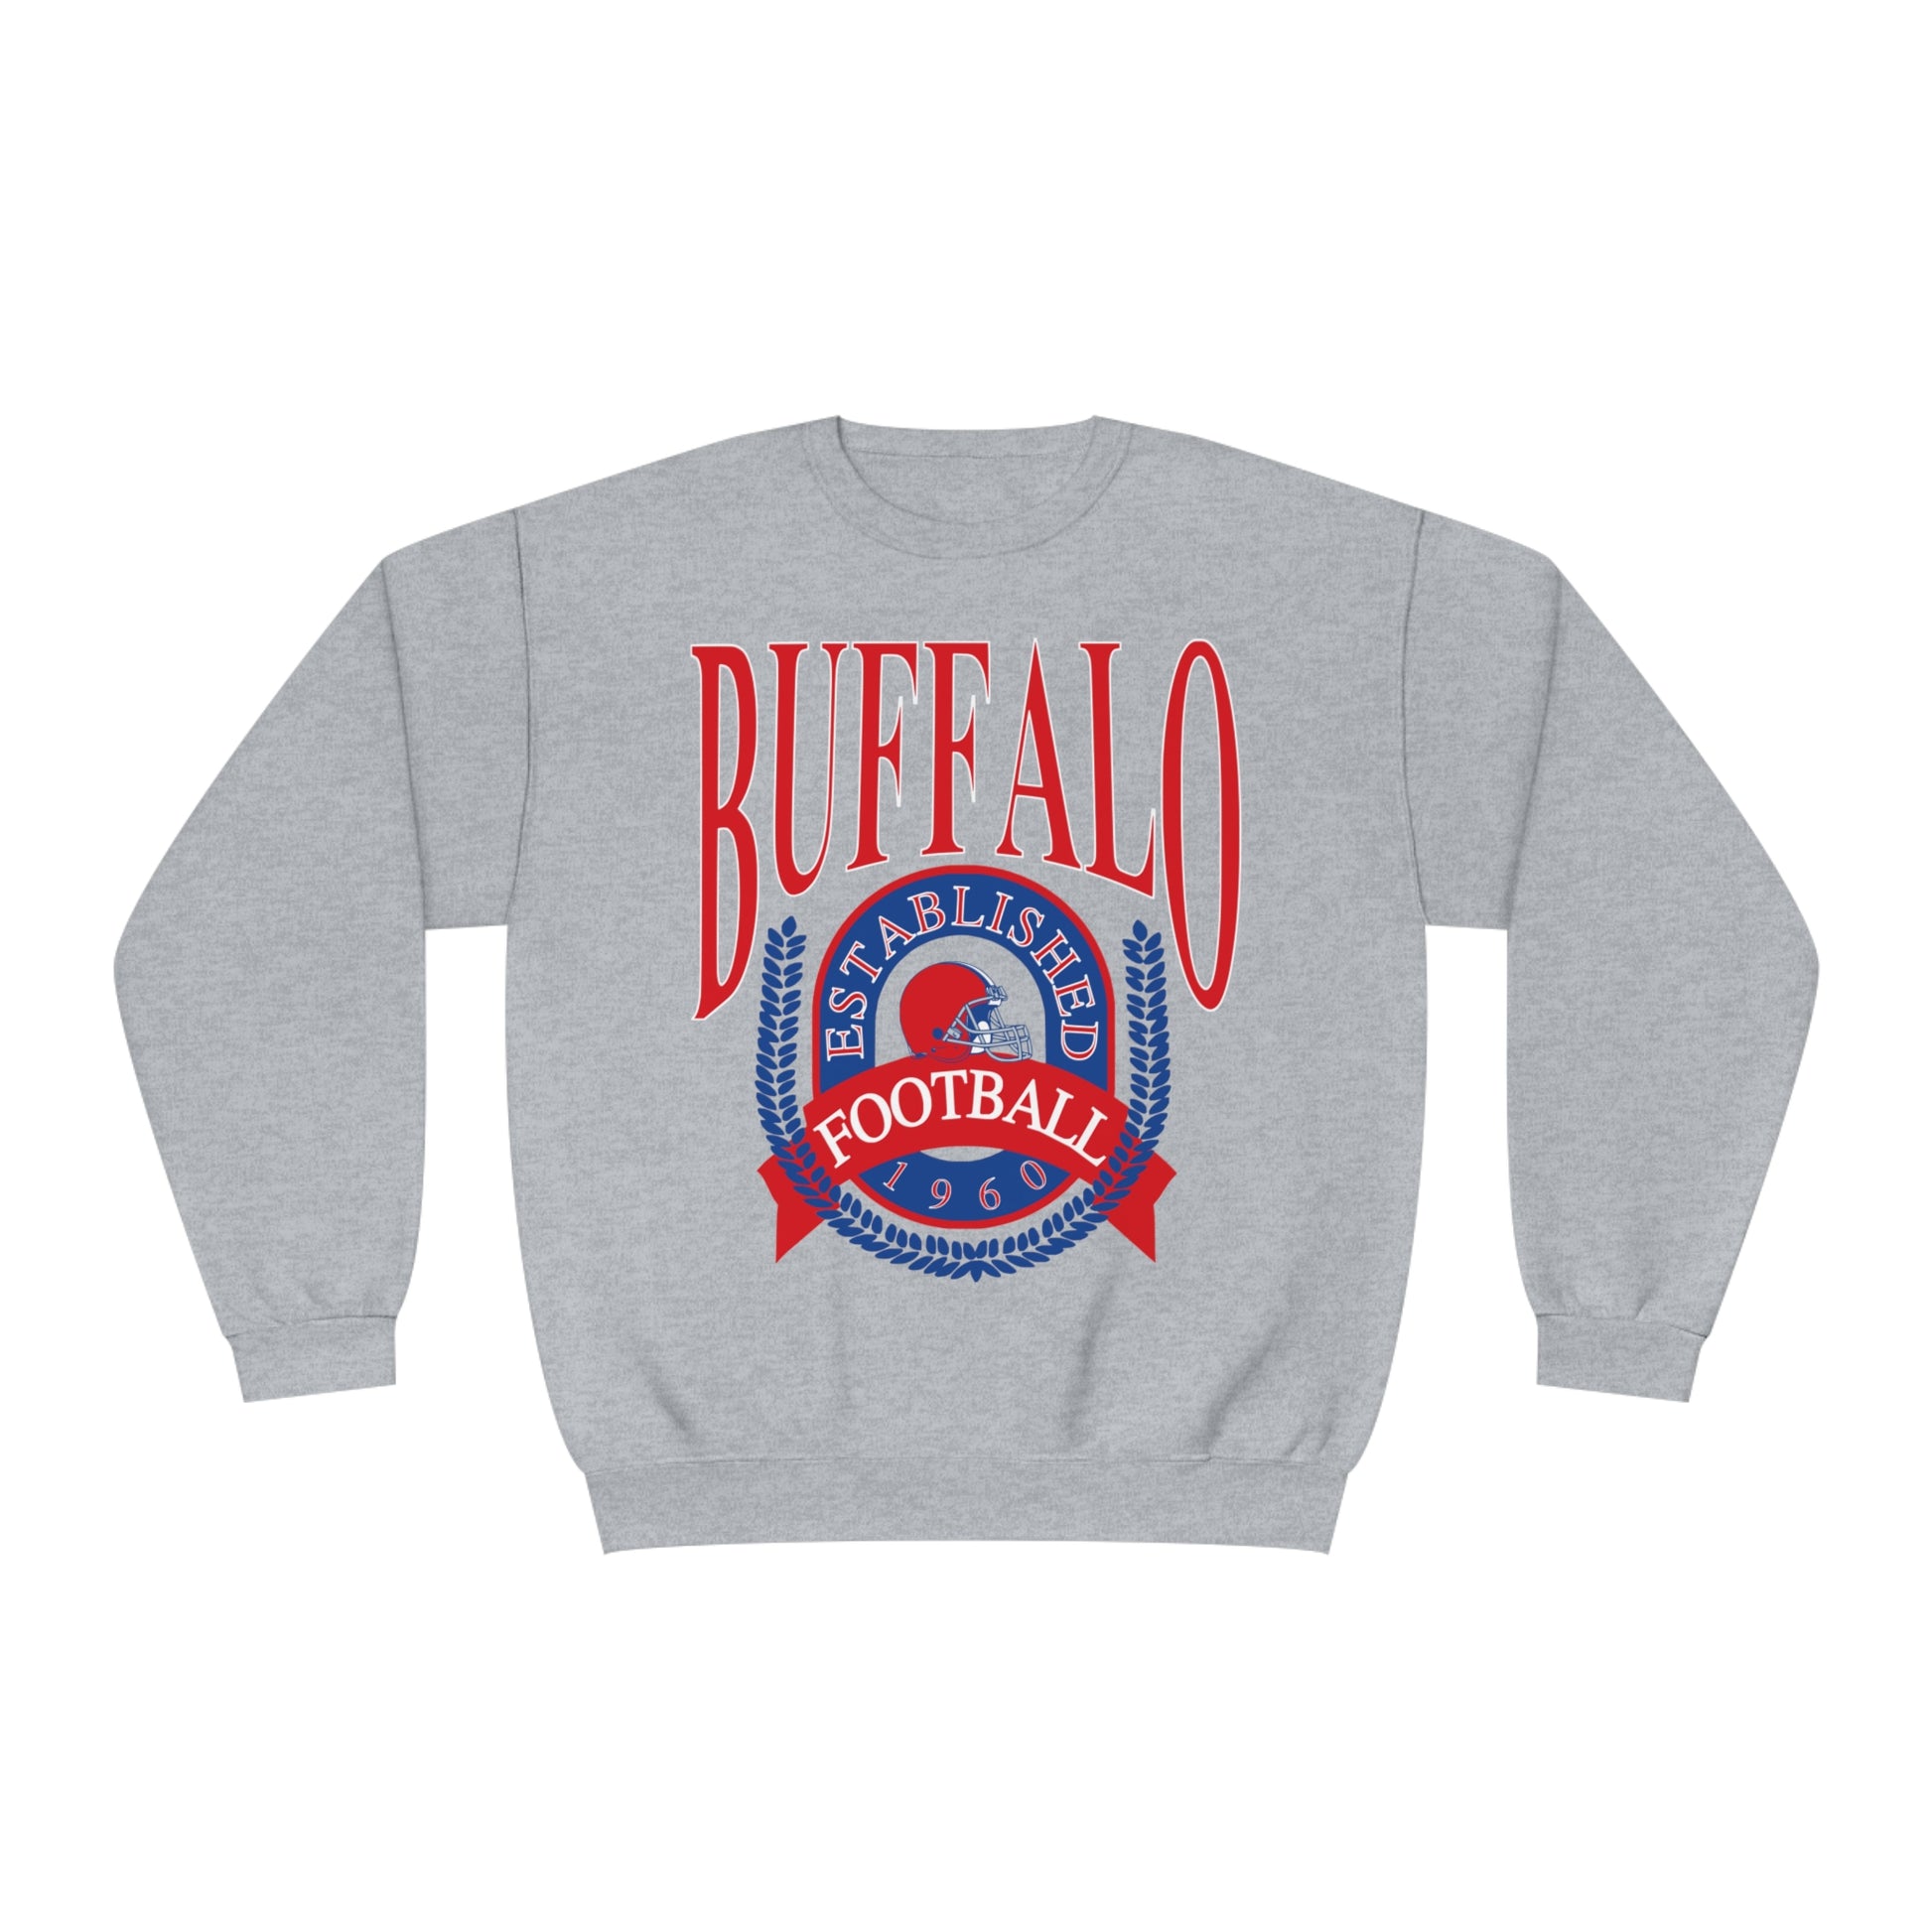 Vintage Buffalo Bills Crewneck Sweatshirt - Retro NFL Football Men's Women's Hoodie - Oversized Apparel - Design 1 gray